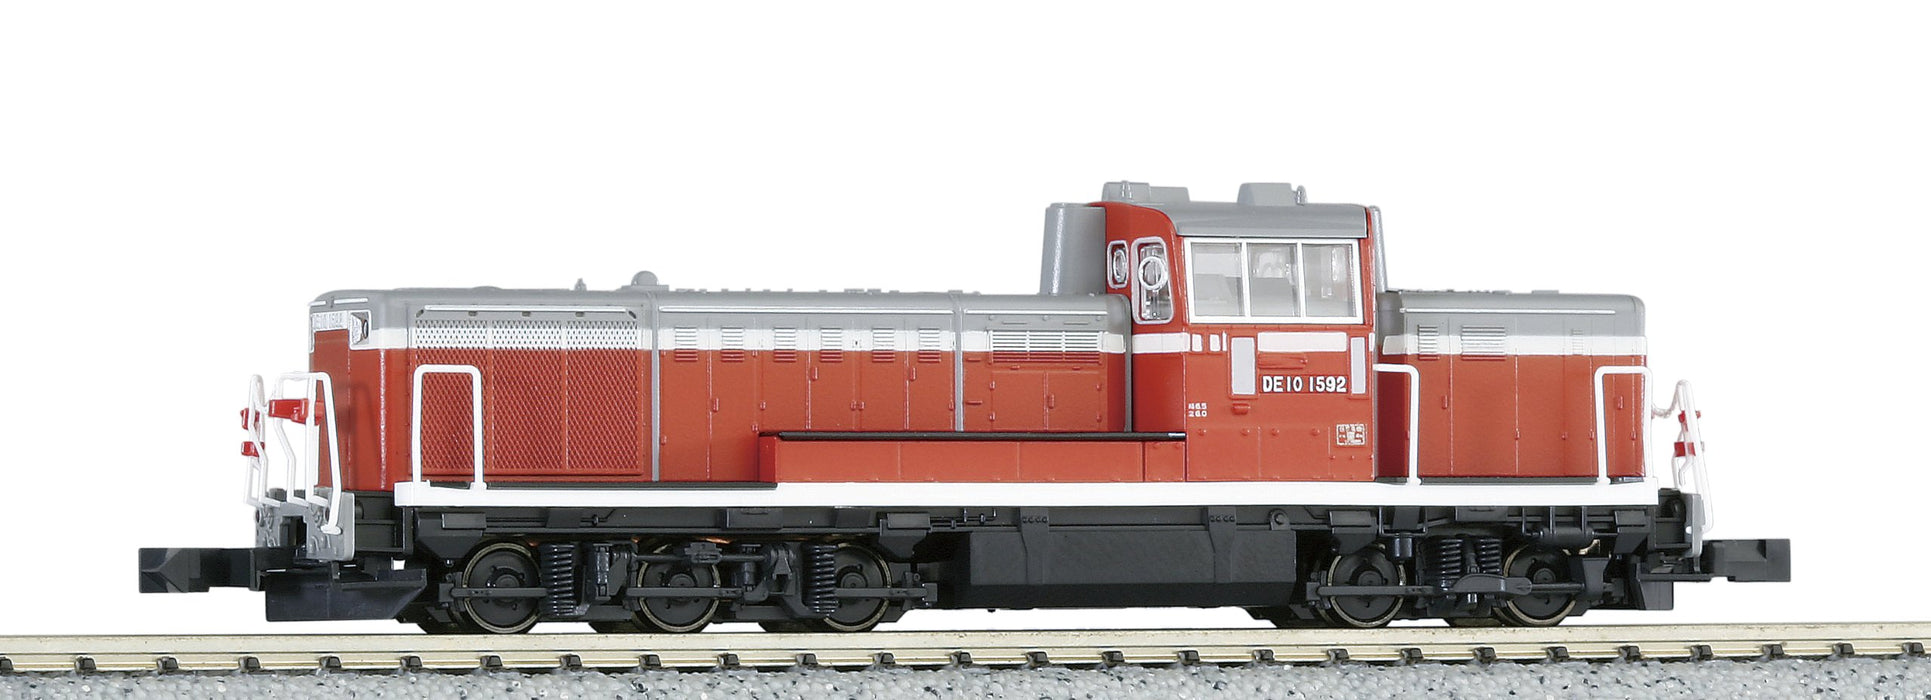 Kato N Gauge De10 7011-1 Cold-Resistant Diesel Locomotive Railway Model